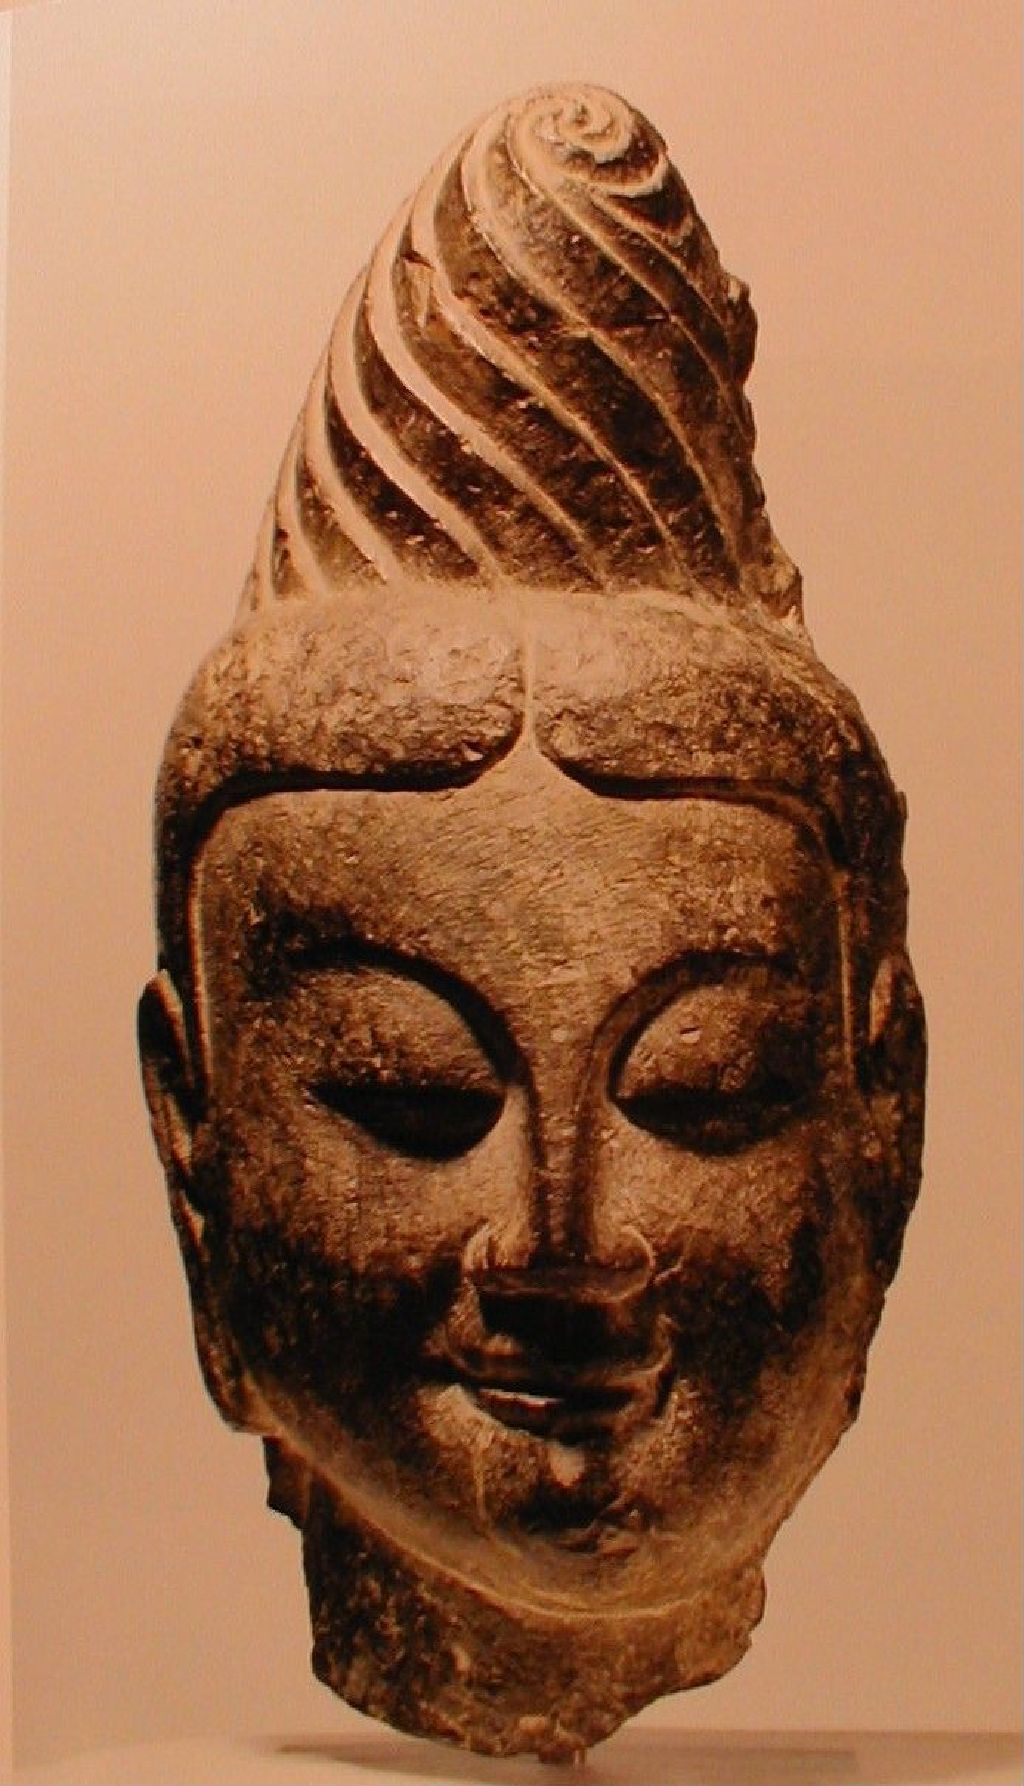 Miniature of Head of a Buddha